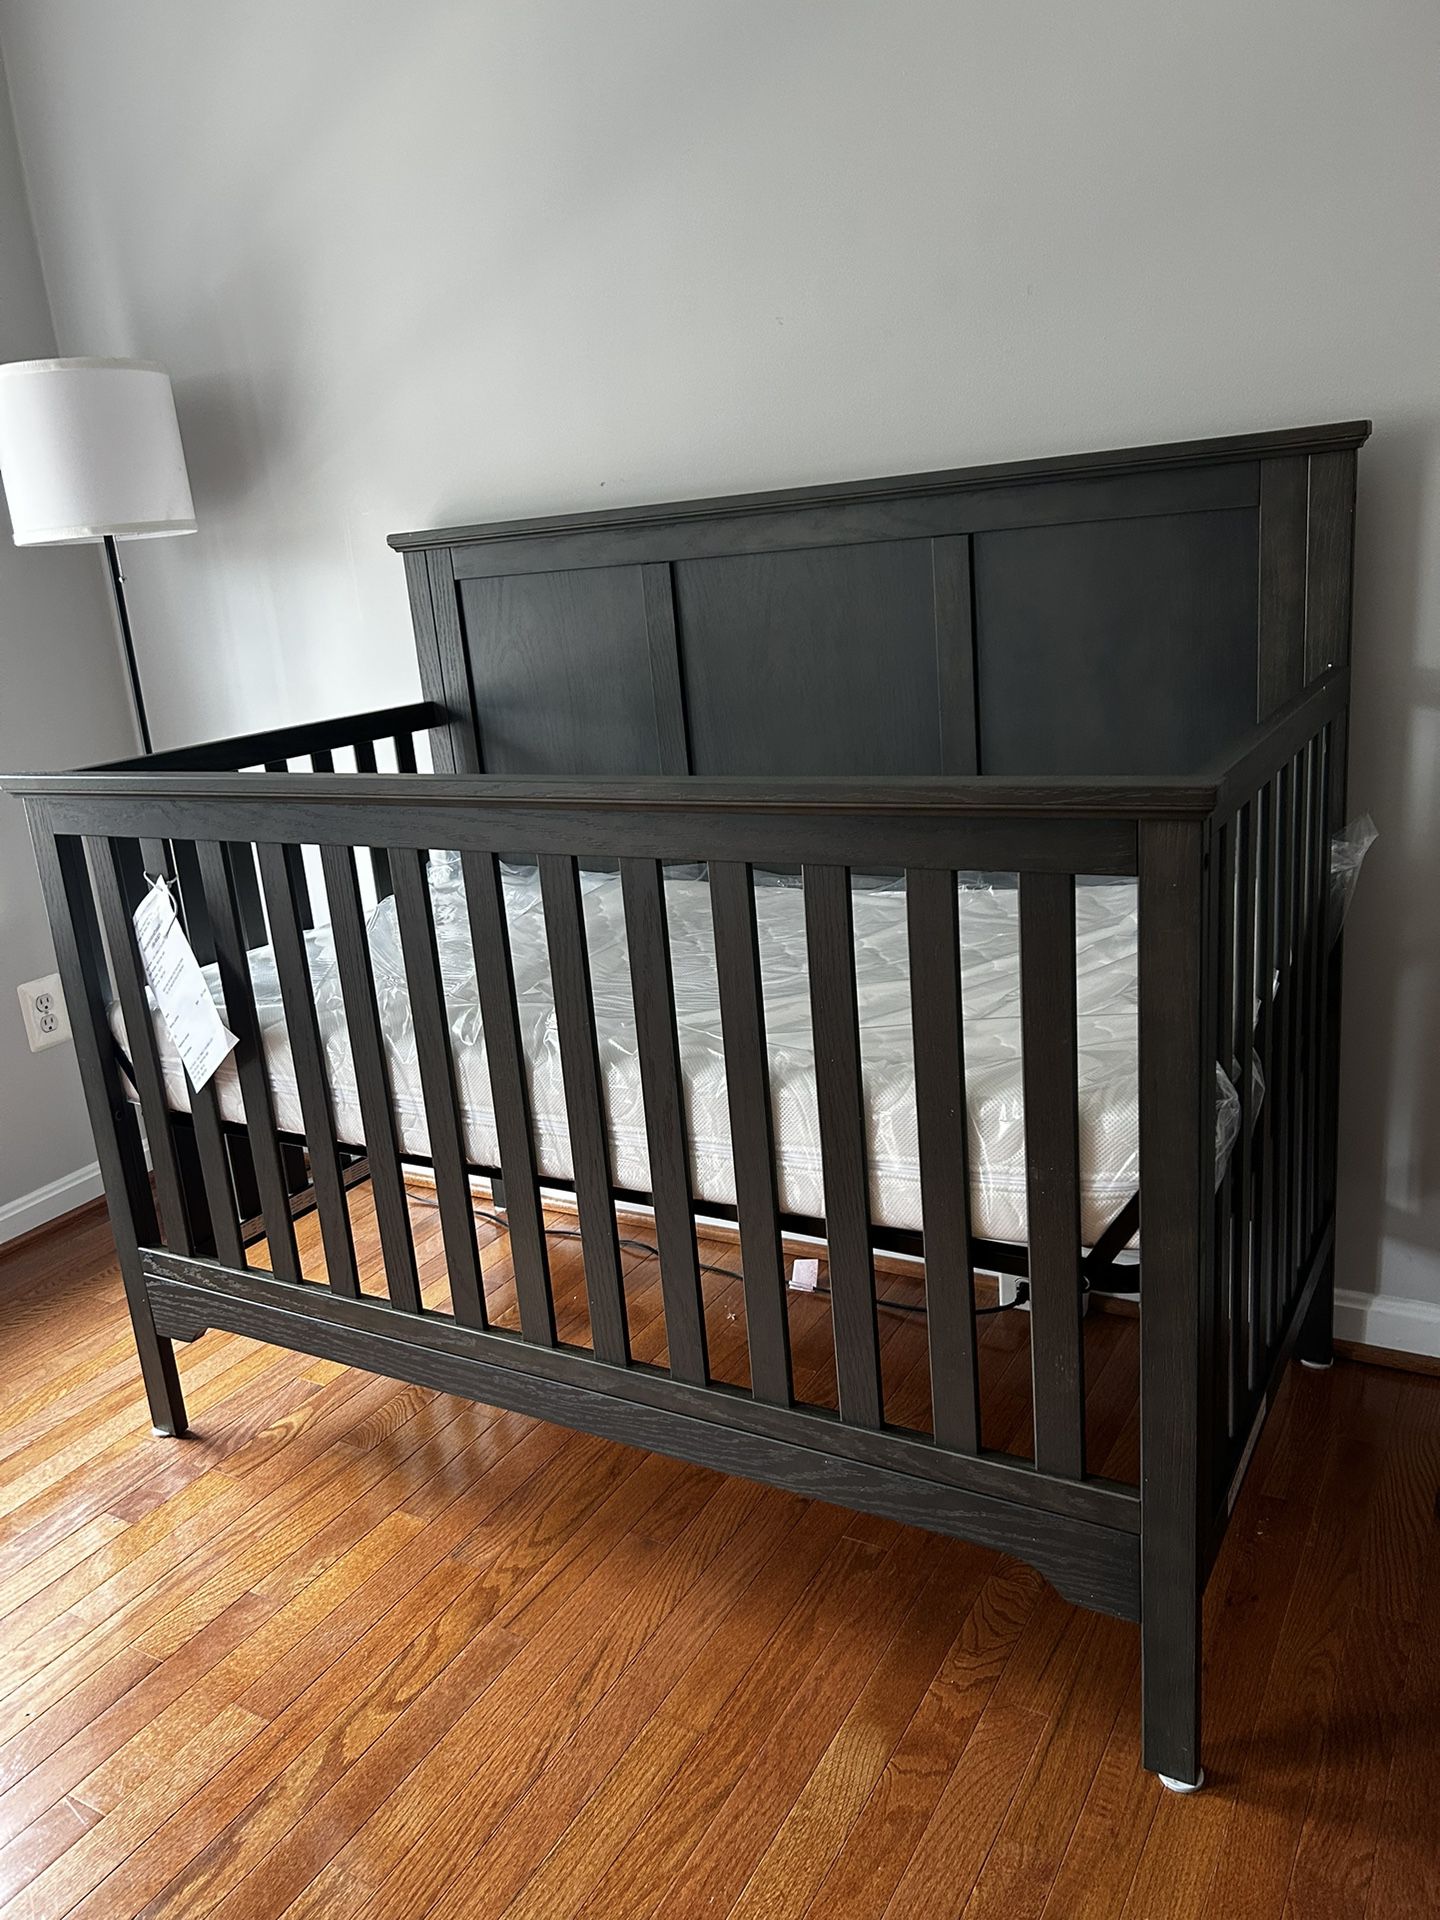 New brown Crib